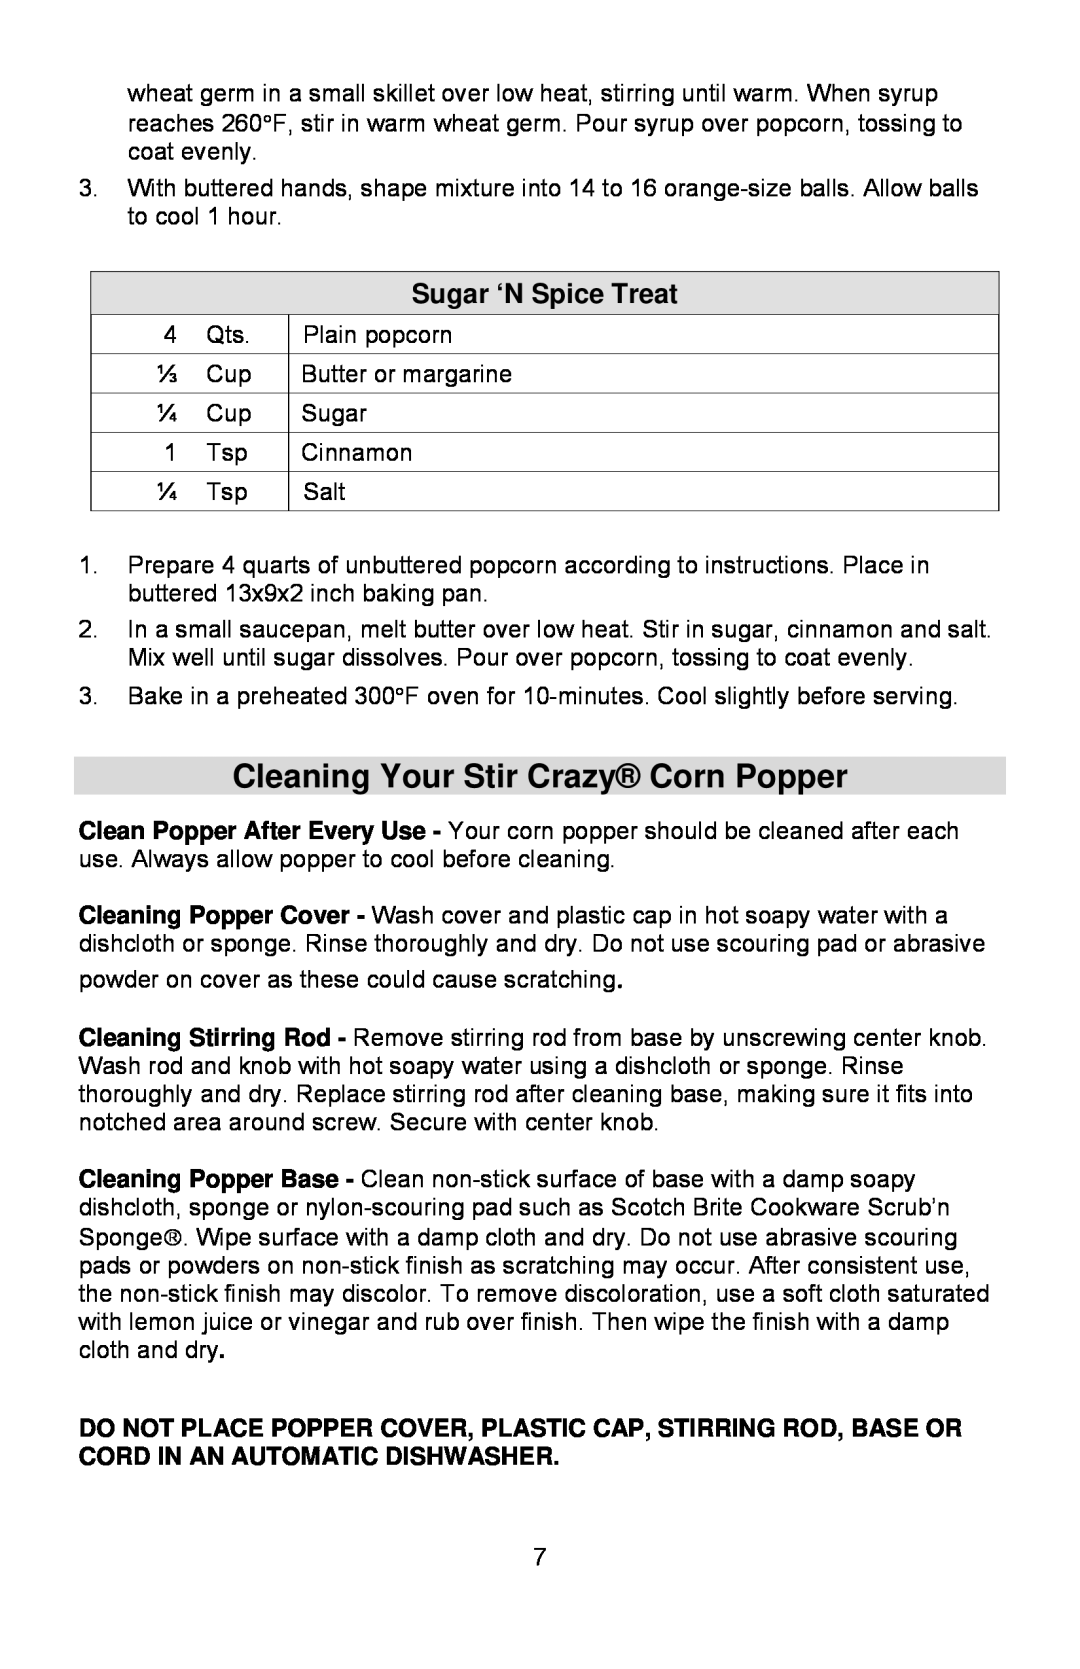 West Bend 8 quart, 6 quart instruction manual Cleaning Your Stir Crazy Corn Popper, Sugar ‘N Spice Treat 